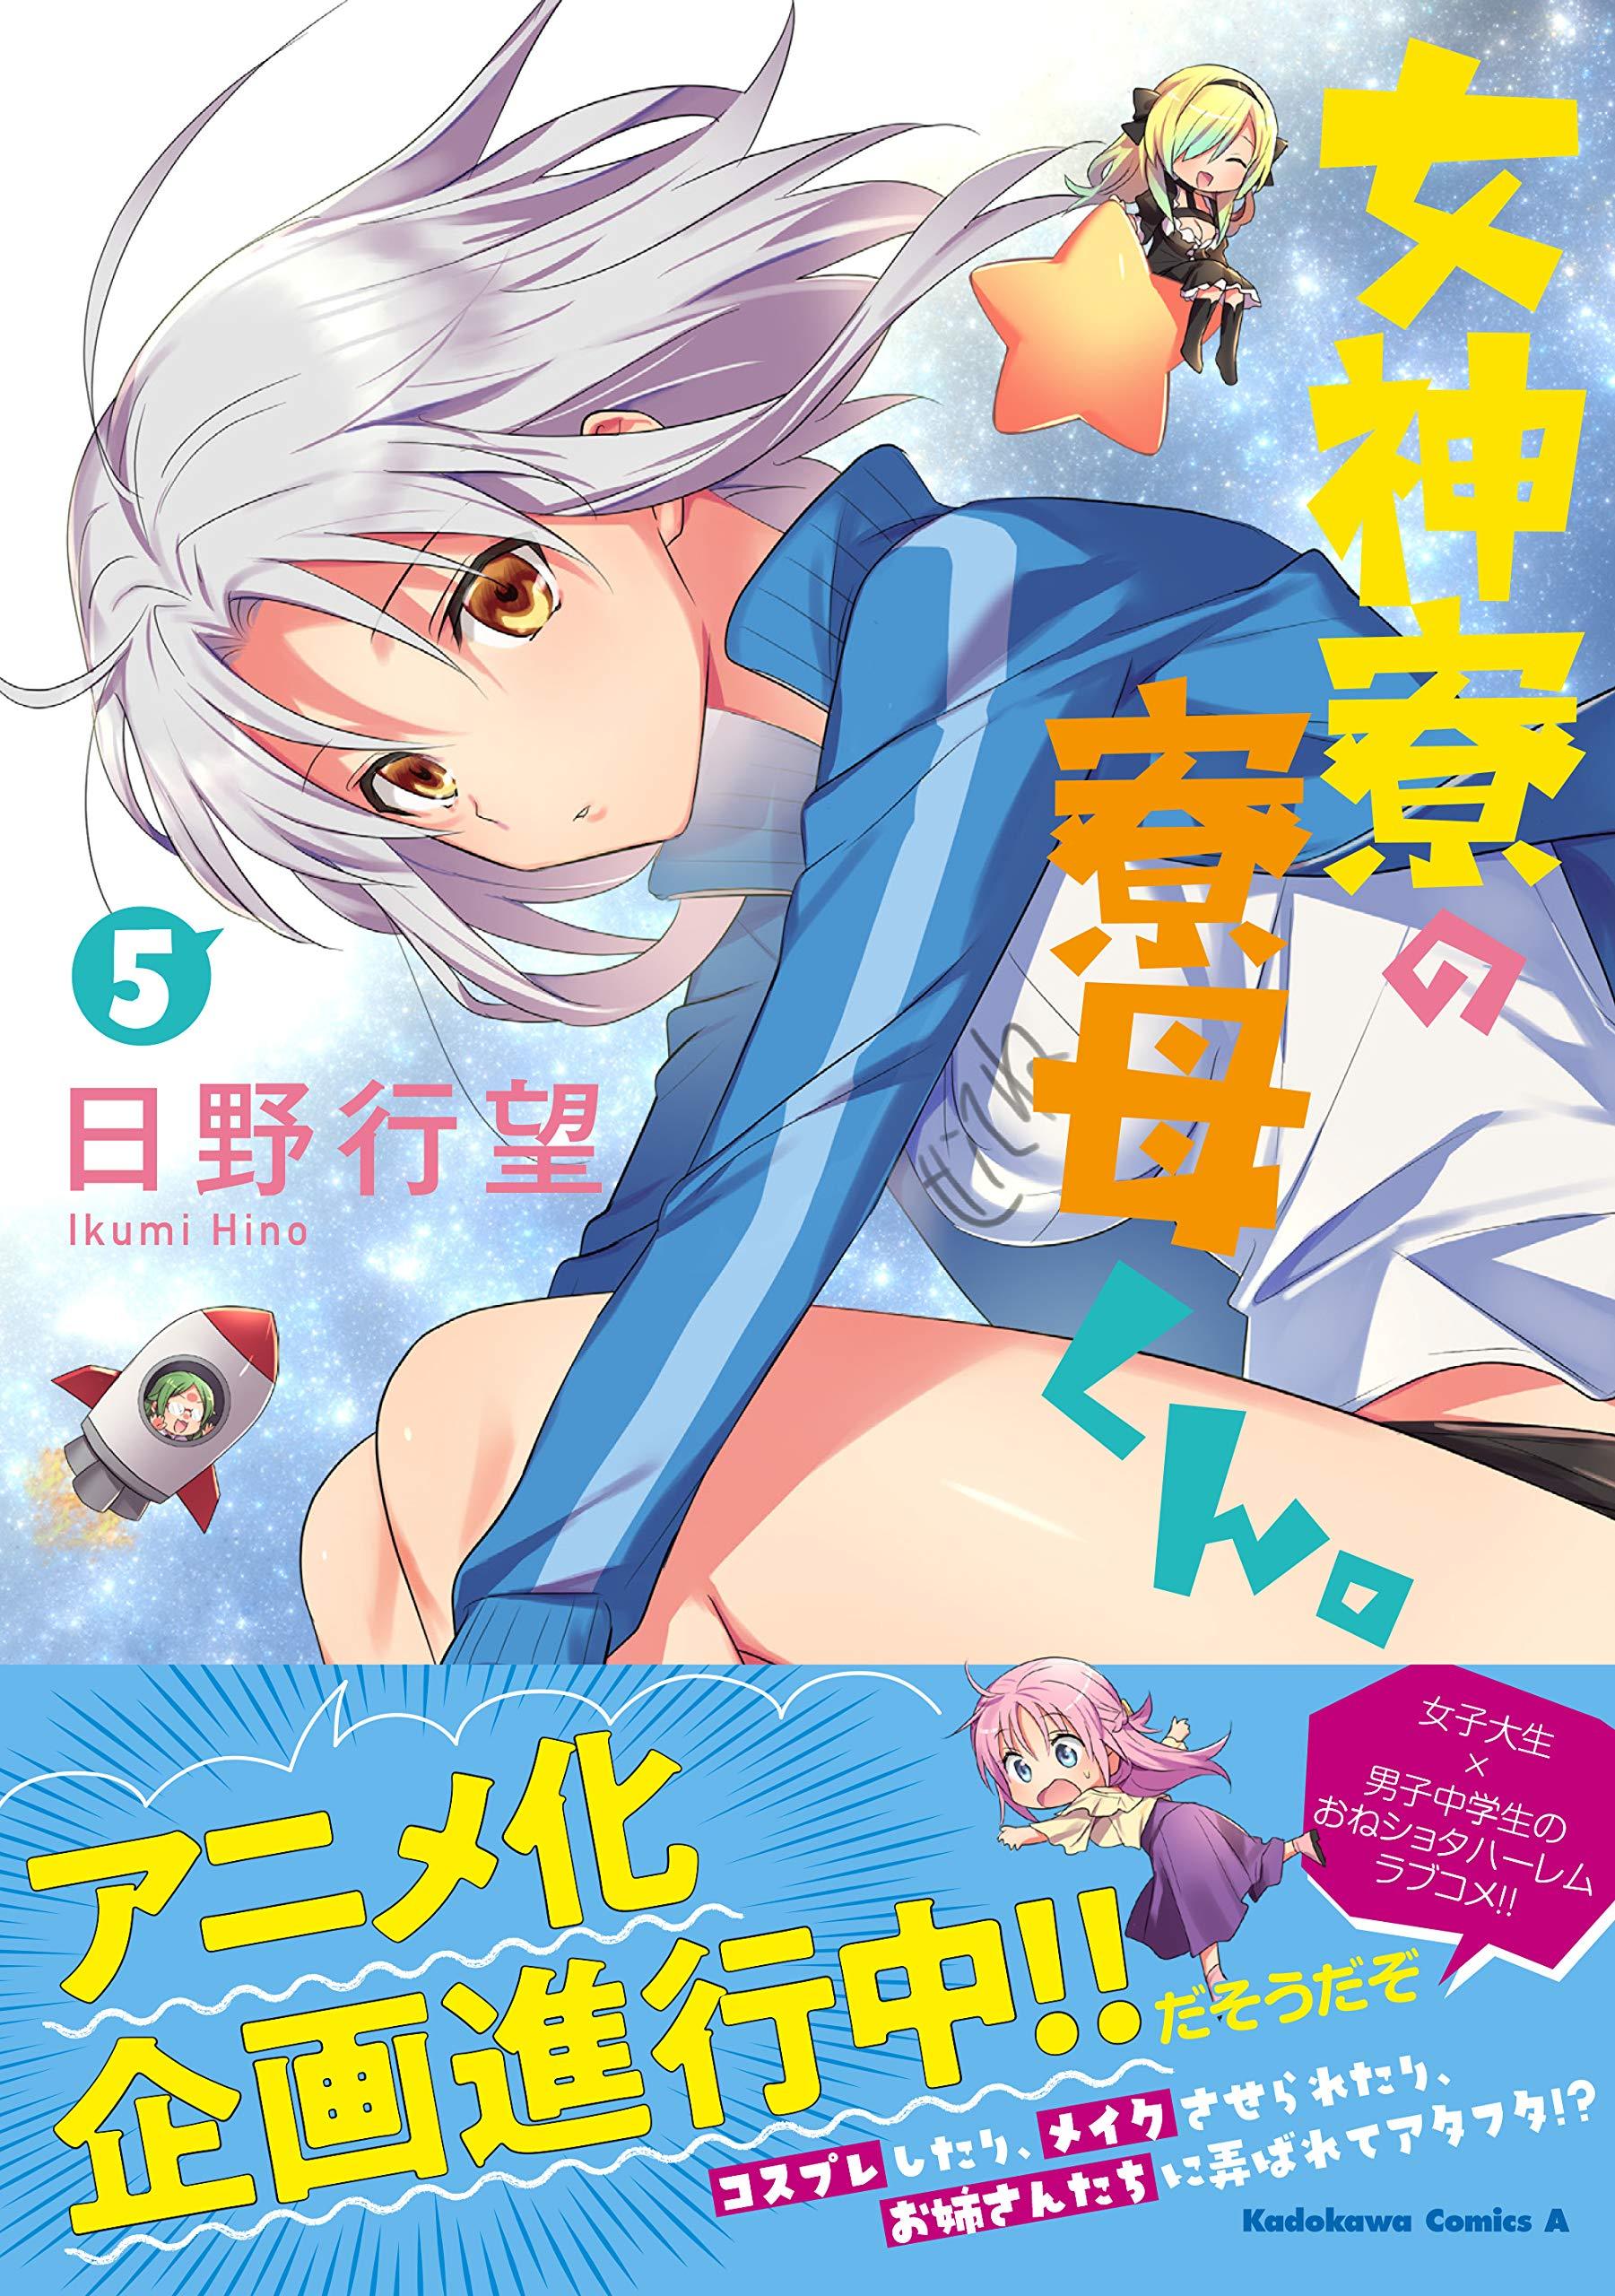 Megami-ryō no Ryōbo-kun manga laves til anime